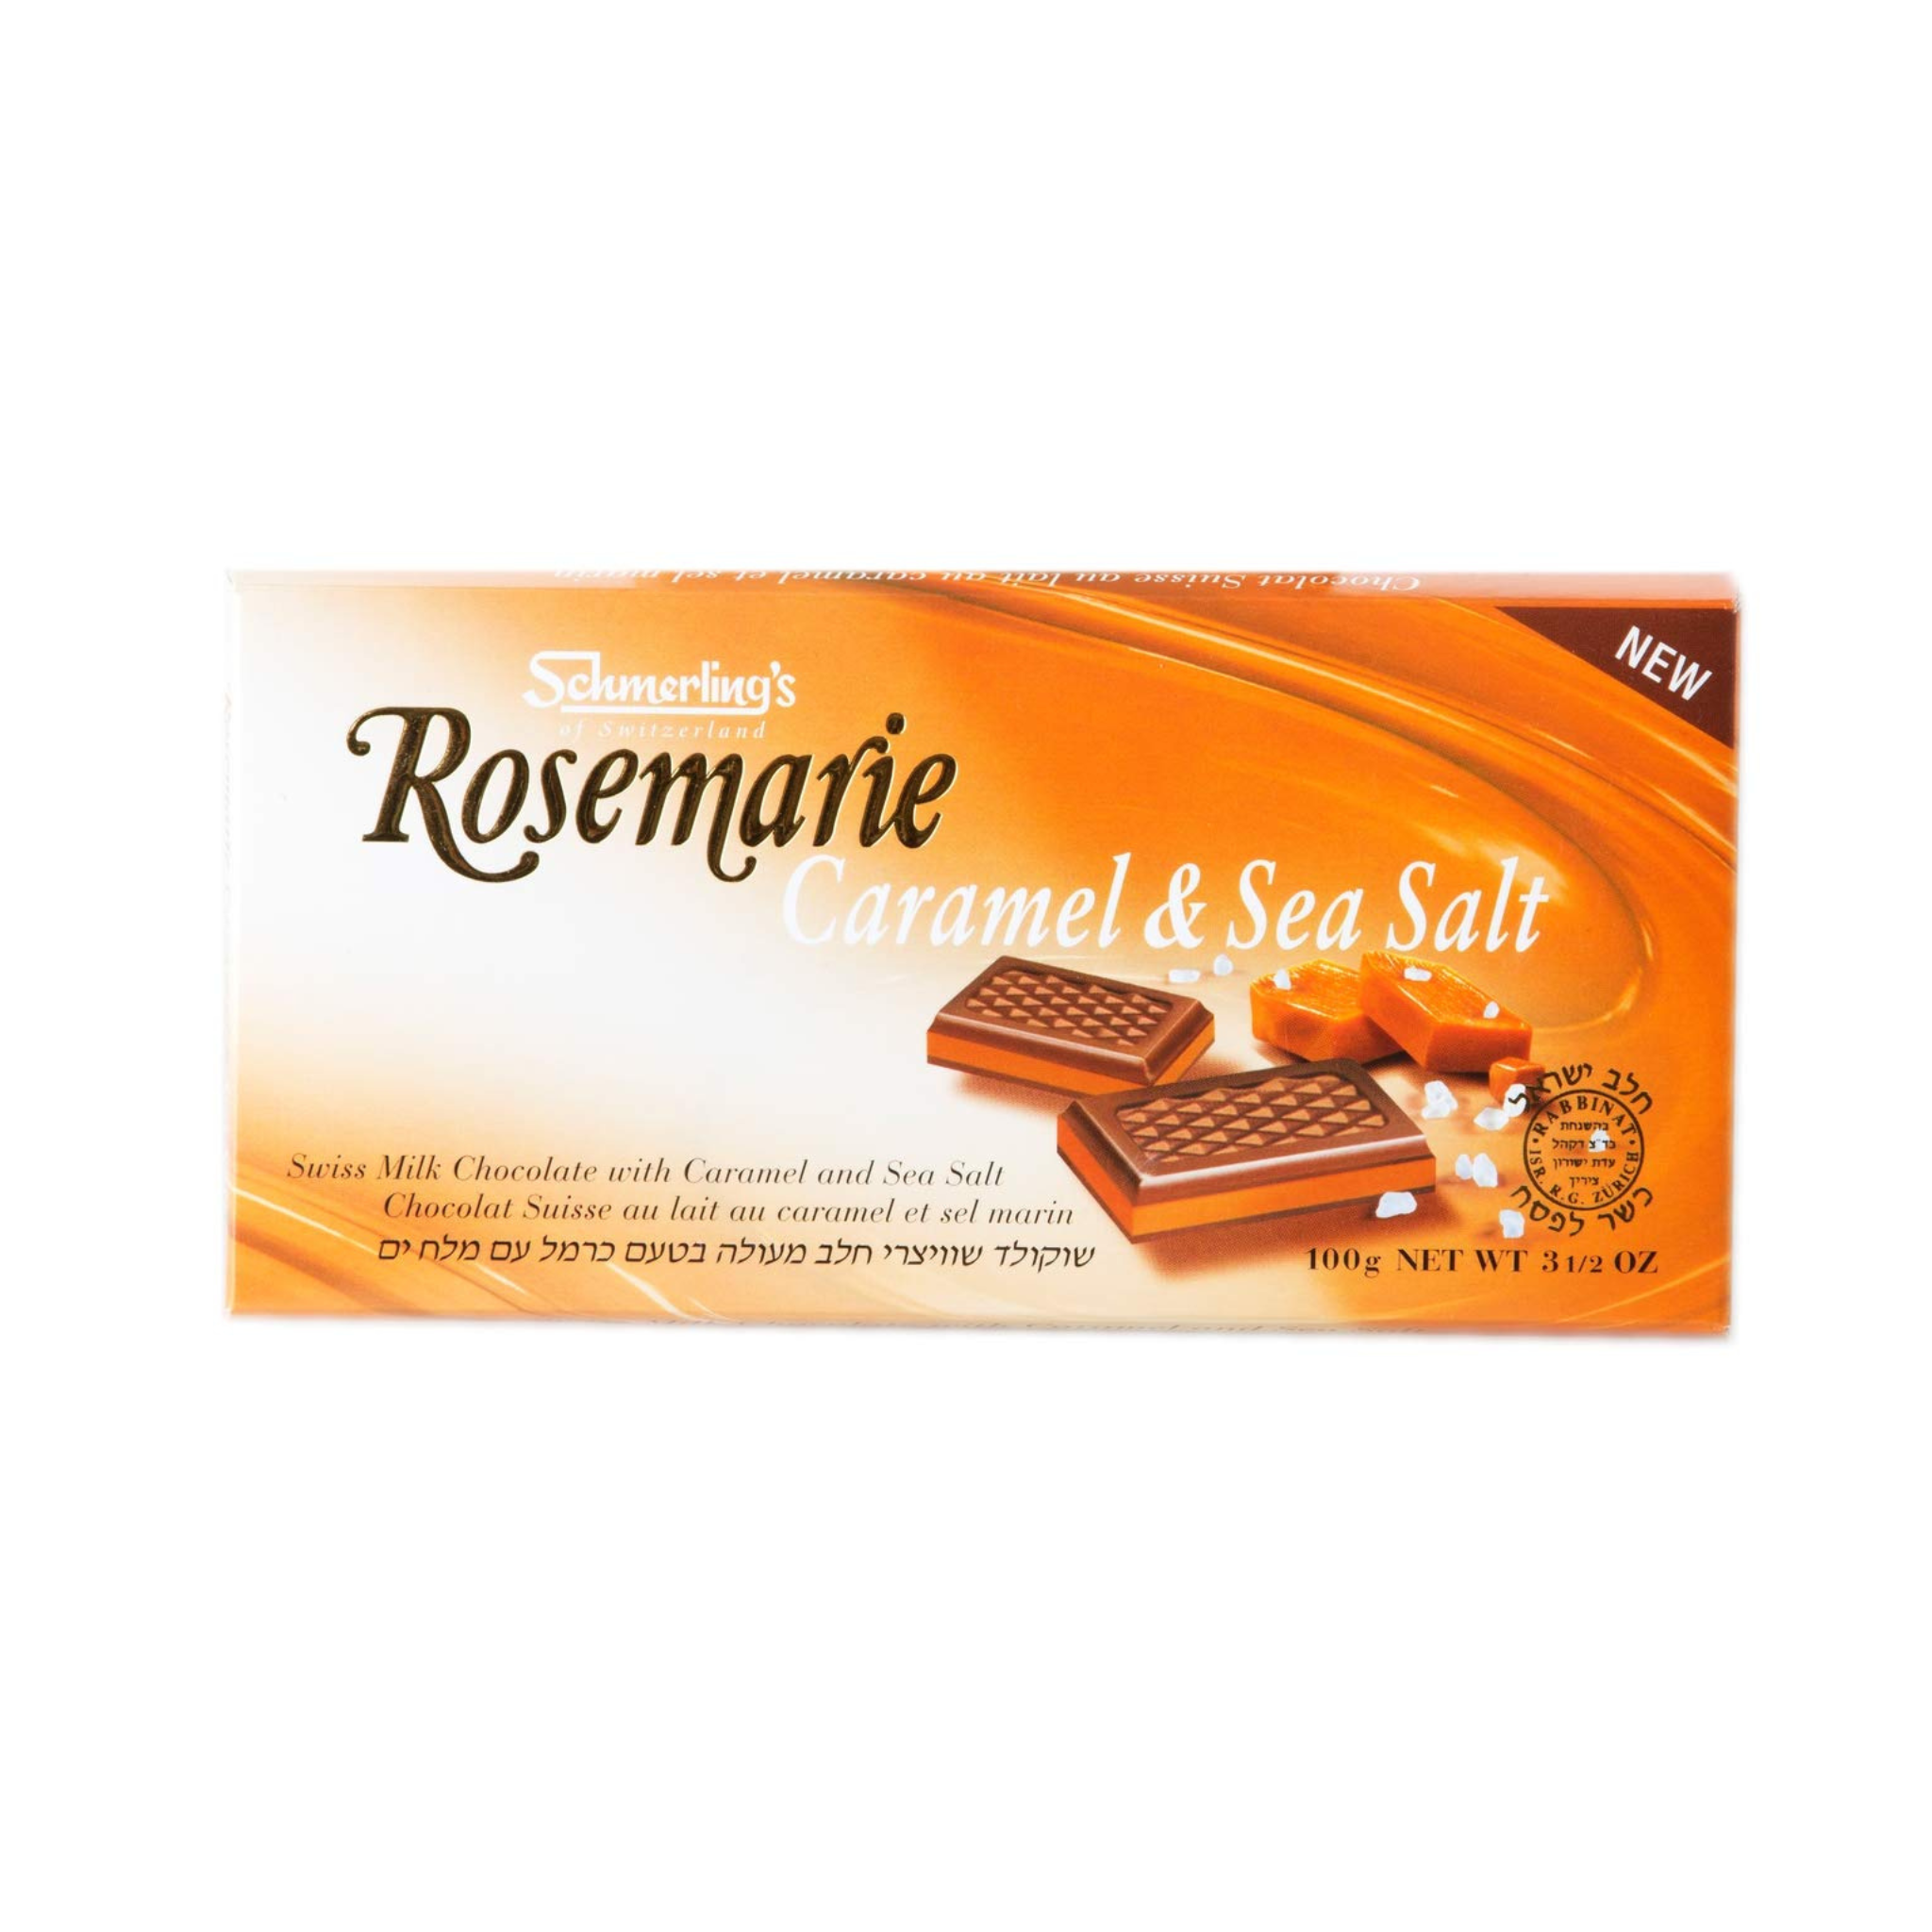 Schmerling's Rosemarie Caramel & Sea Salt Chocolate Bar, Kosher For Passover, 5 Pack